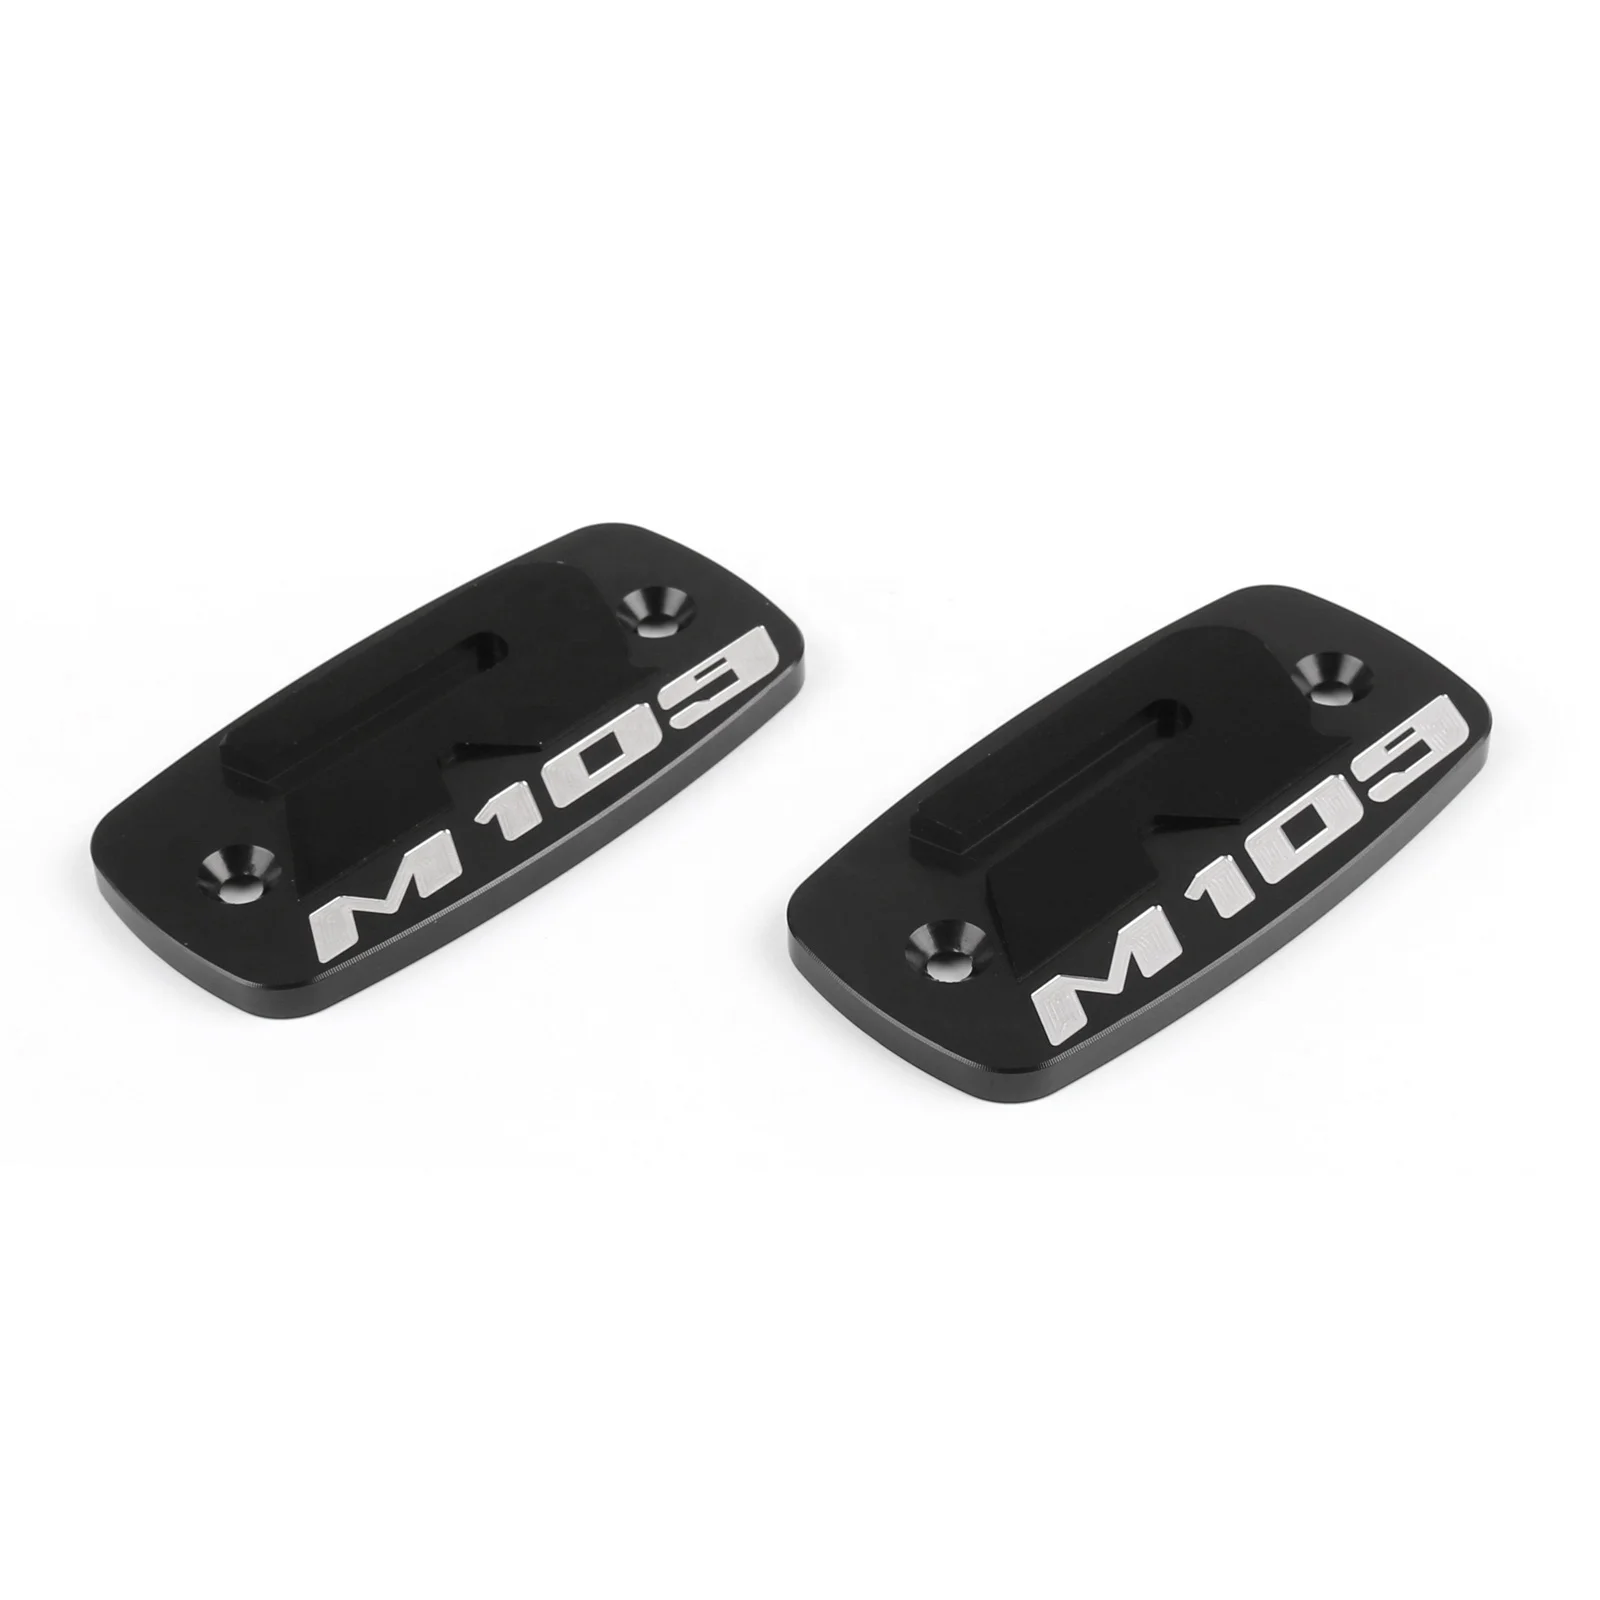 

Free Shipping New Pair Brake Reservoir Caps Cover For Suzuki Boulevard M109R M109 2006-2015, Black